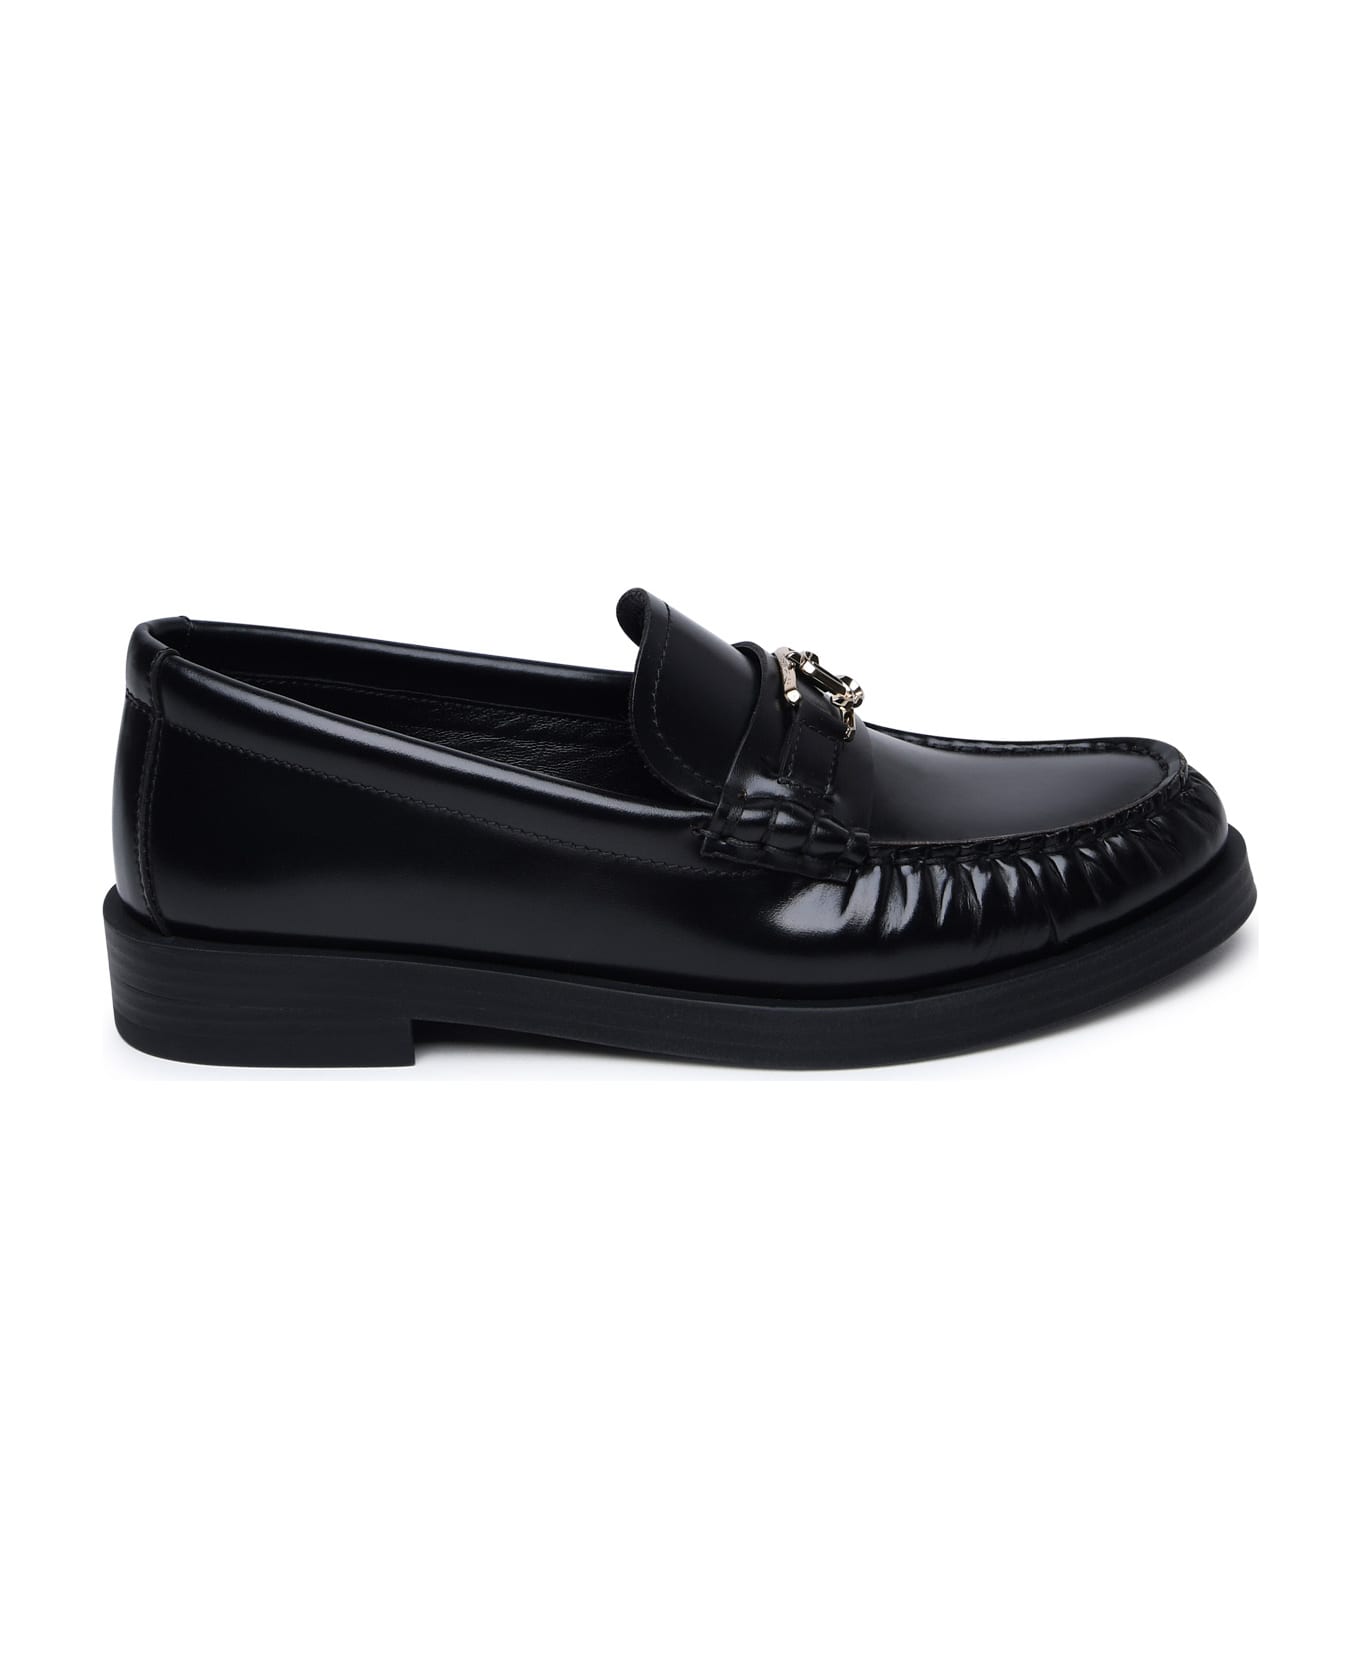 Jimmy Choo Black Leather Loafers - Black